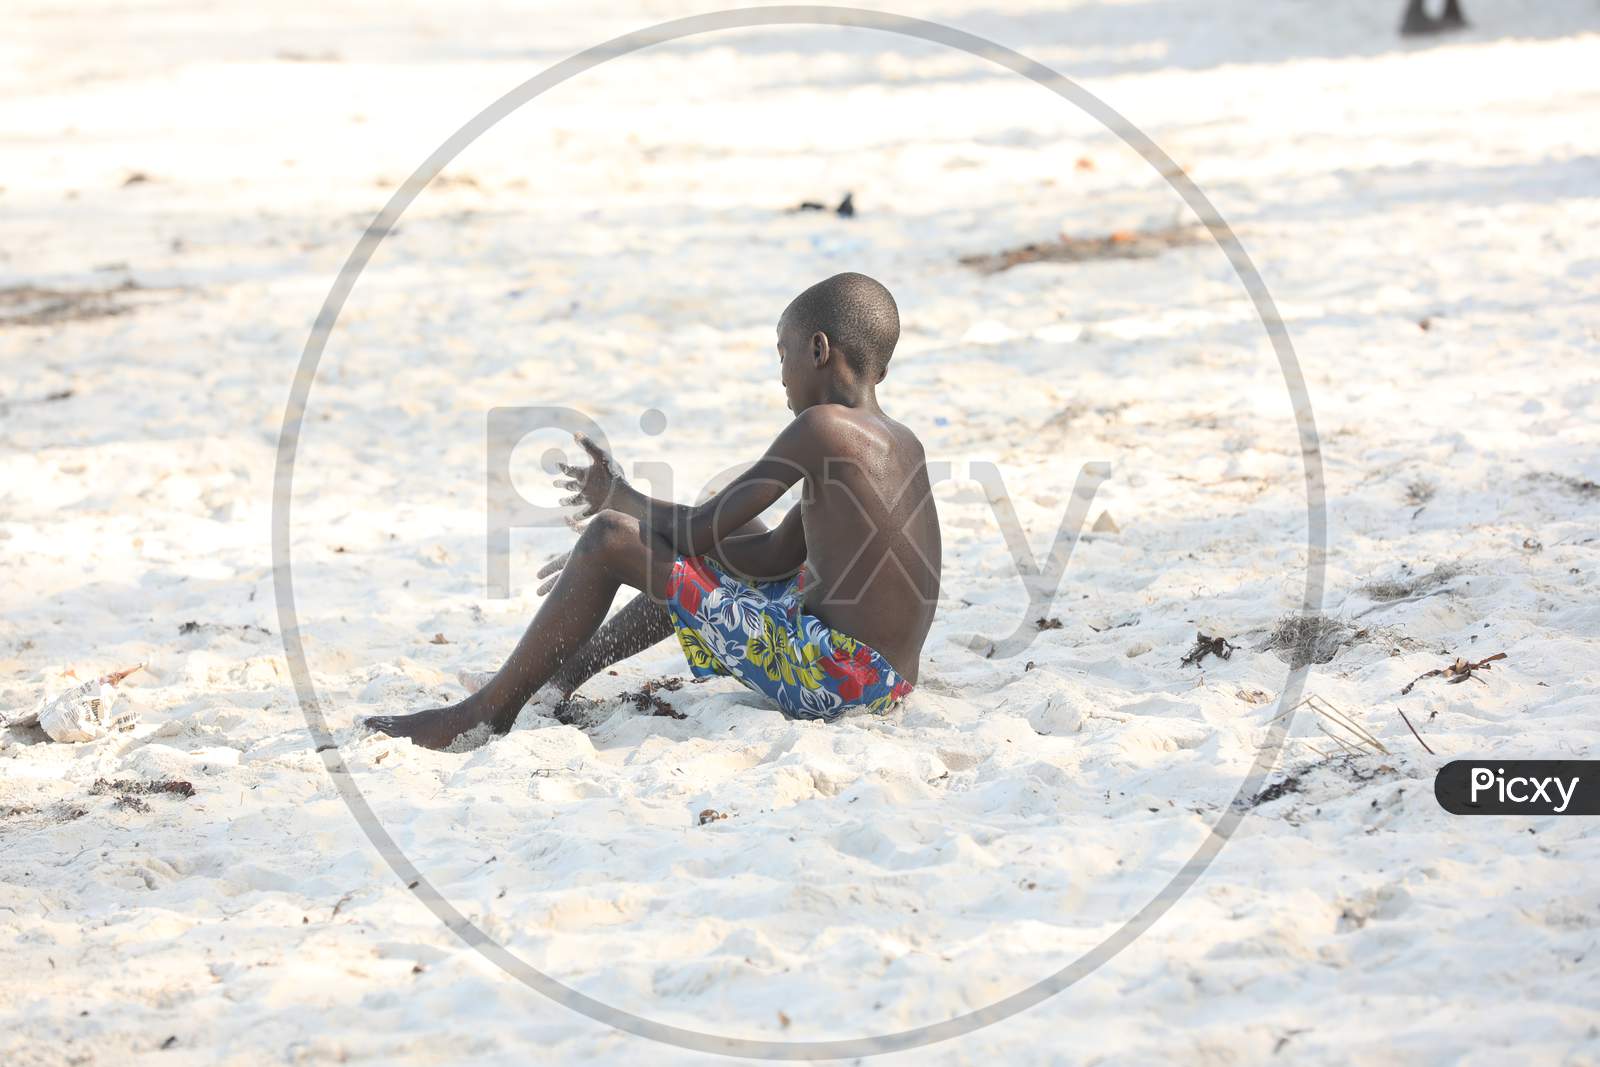 A Shirtless Kenya boy sitting by the beach